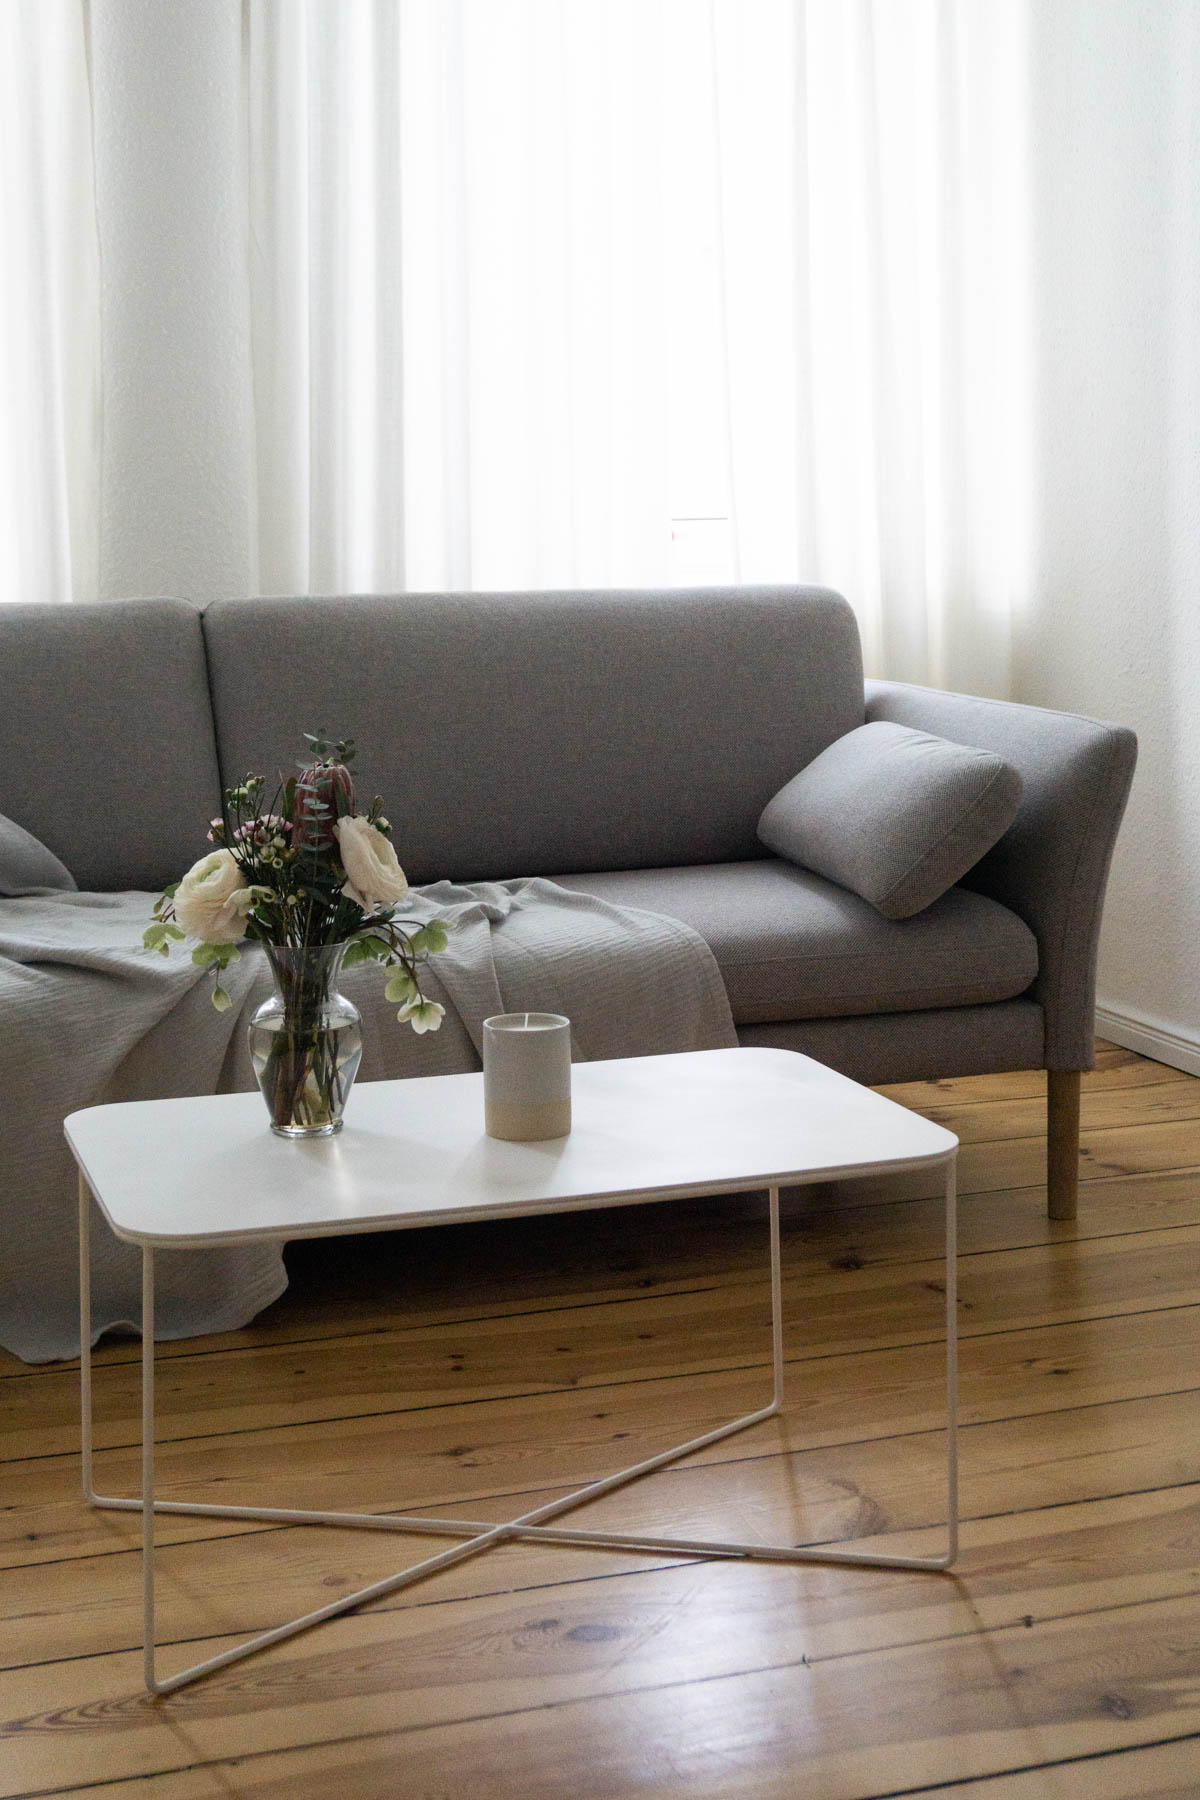 Minimalist Scandinavian Living Room, Berlin Apartment, Ranunculus Bouquet - RG Daily Blog